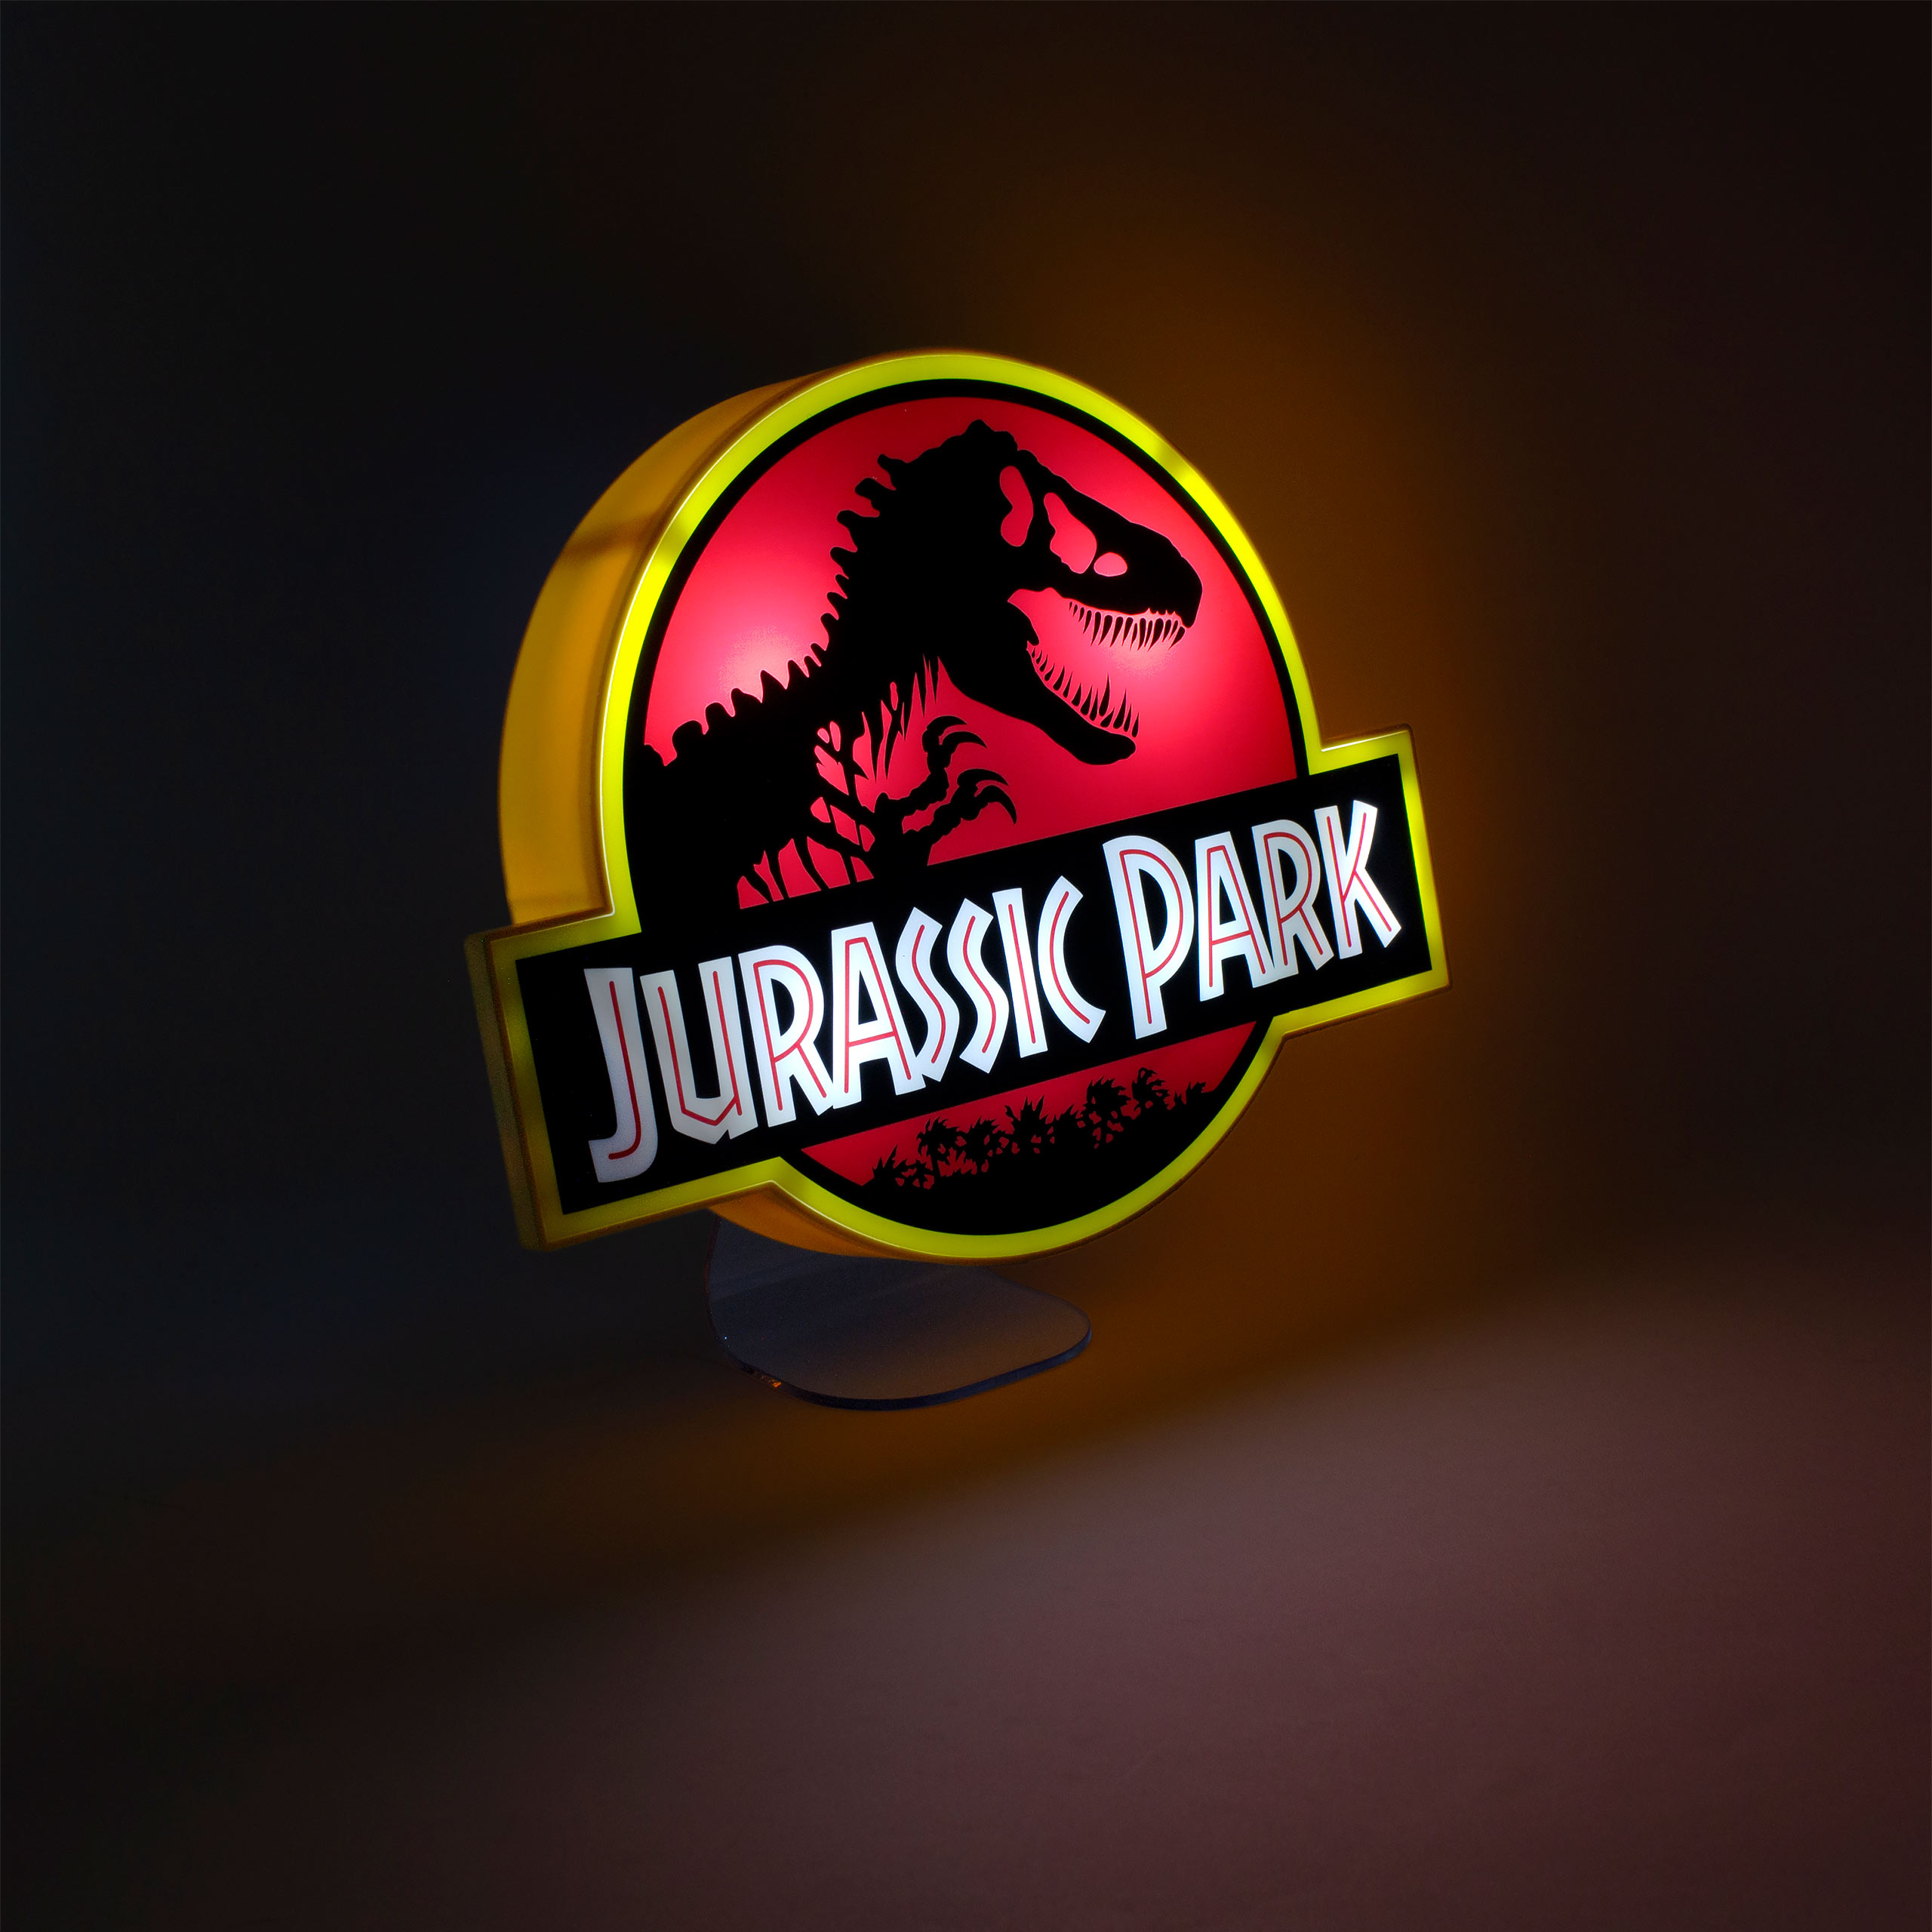 Jurassic Park - Logo Lamp inclusief Stand